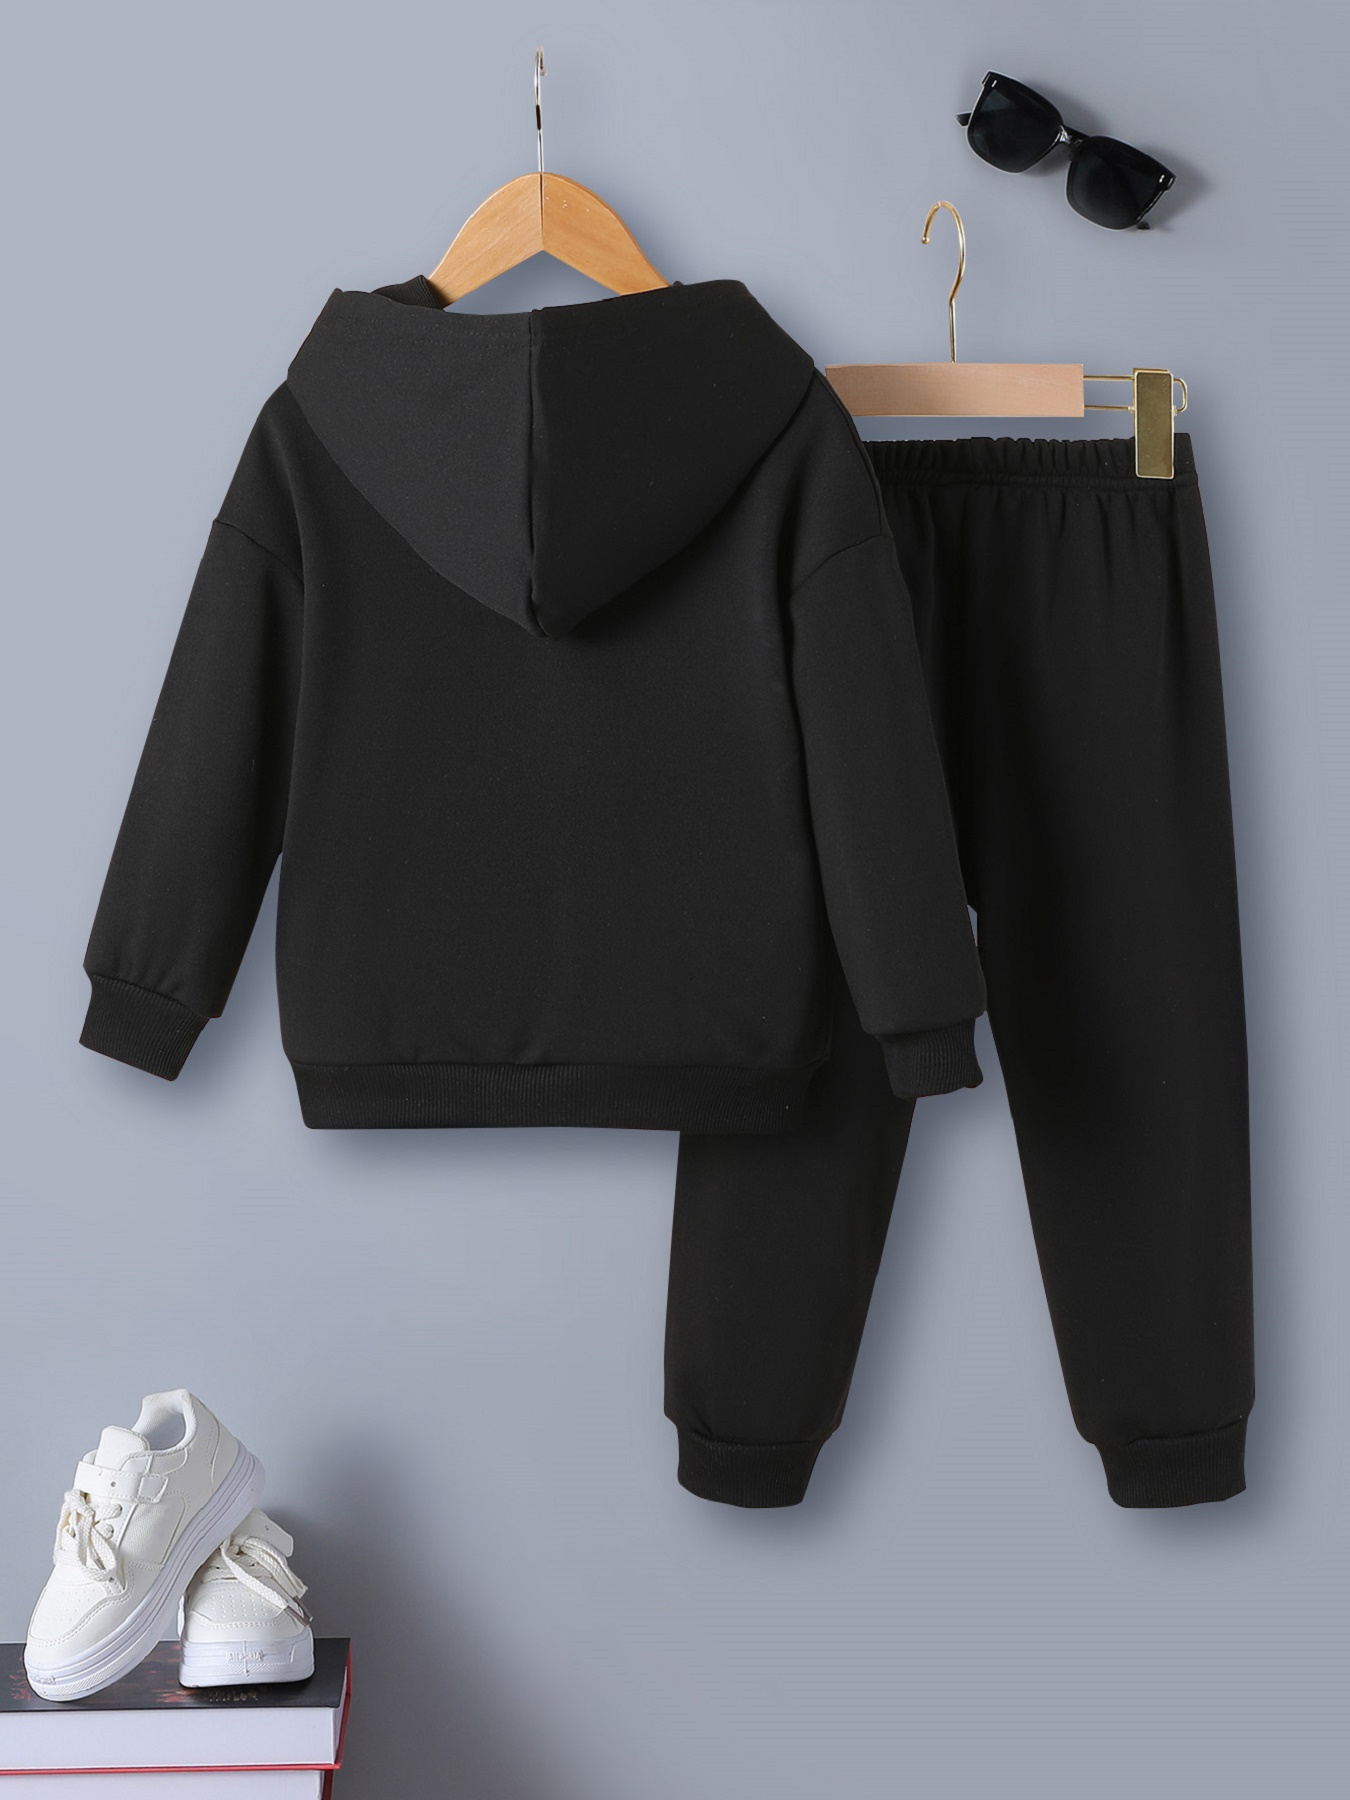 2pcs little man print outfit for boys hoodie comfy pants set kids clothing